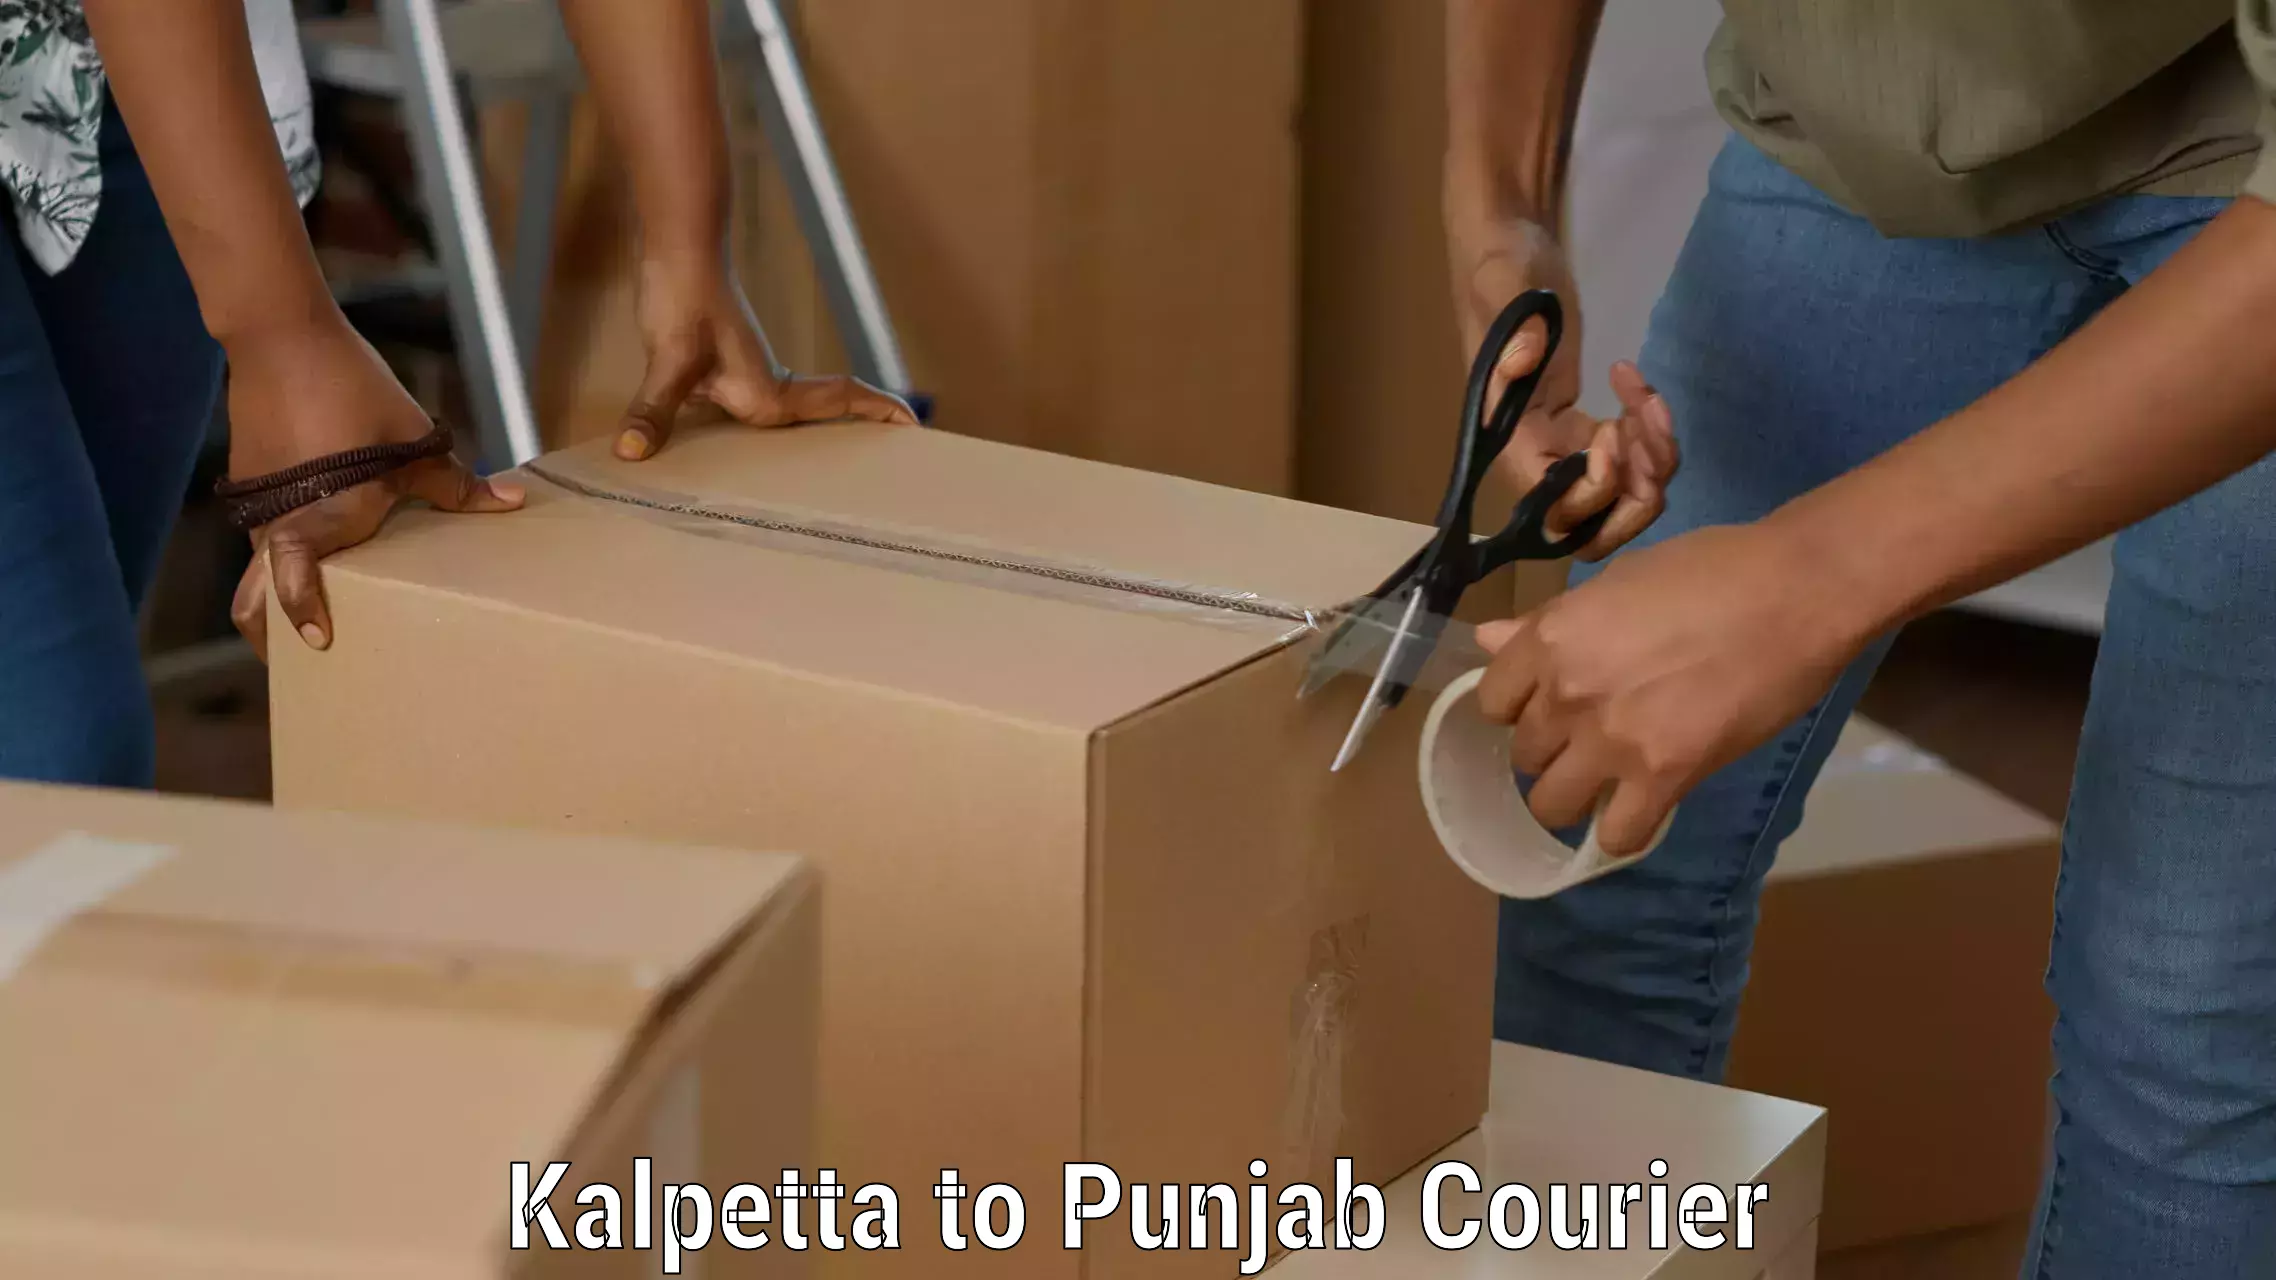 Courier service innovation Kalpetta to Punjab